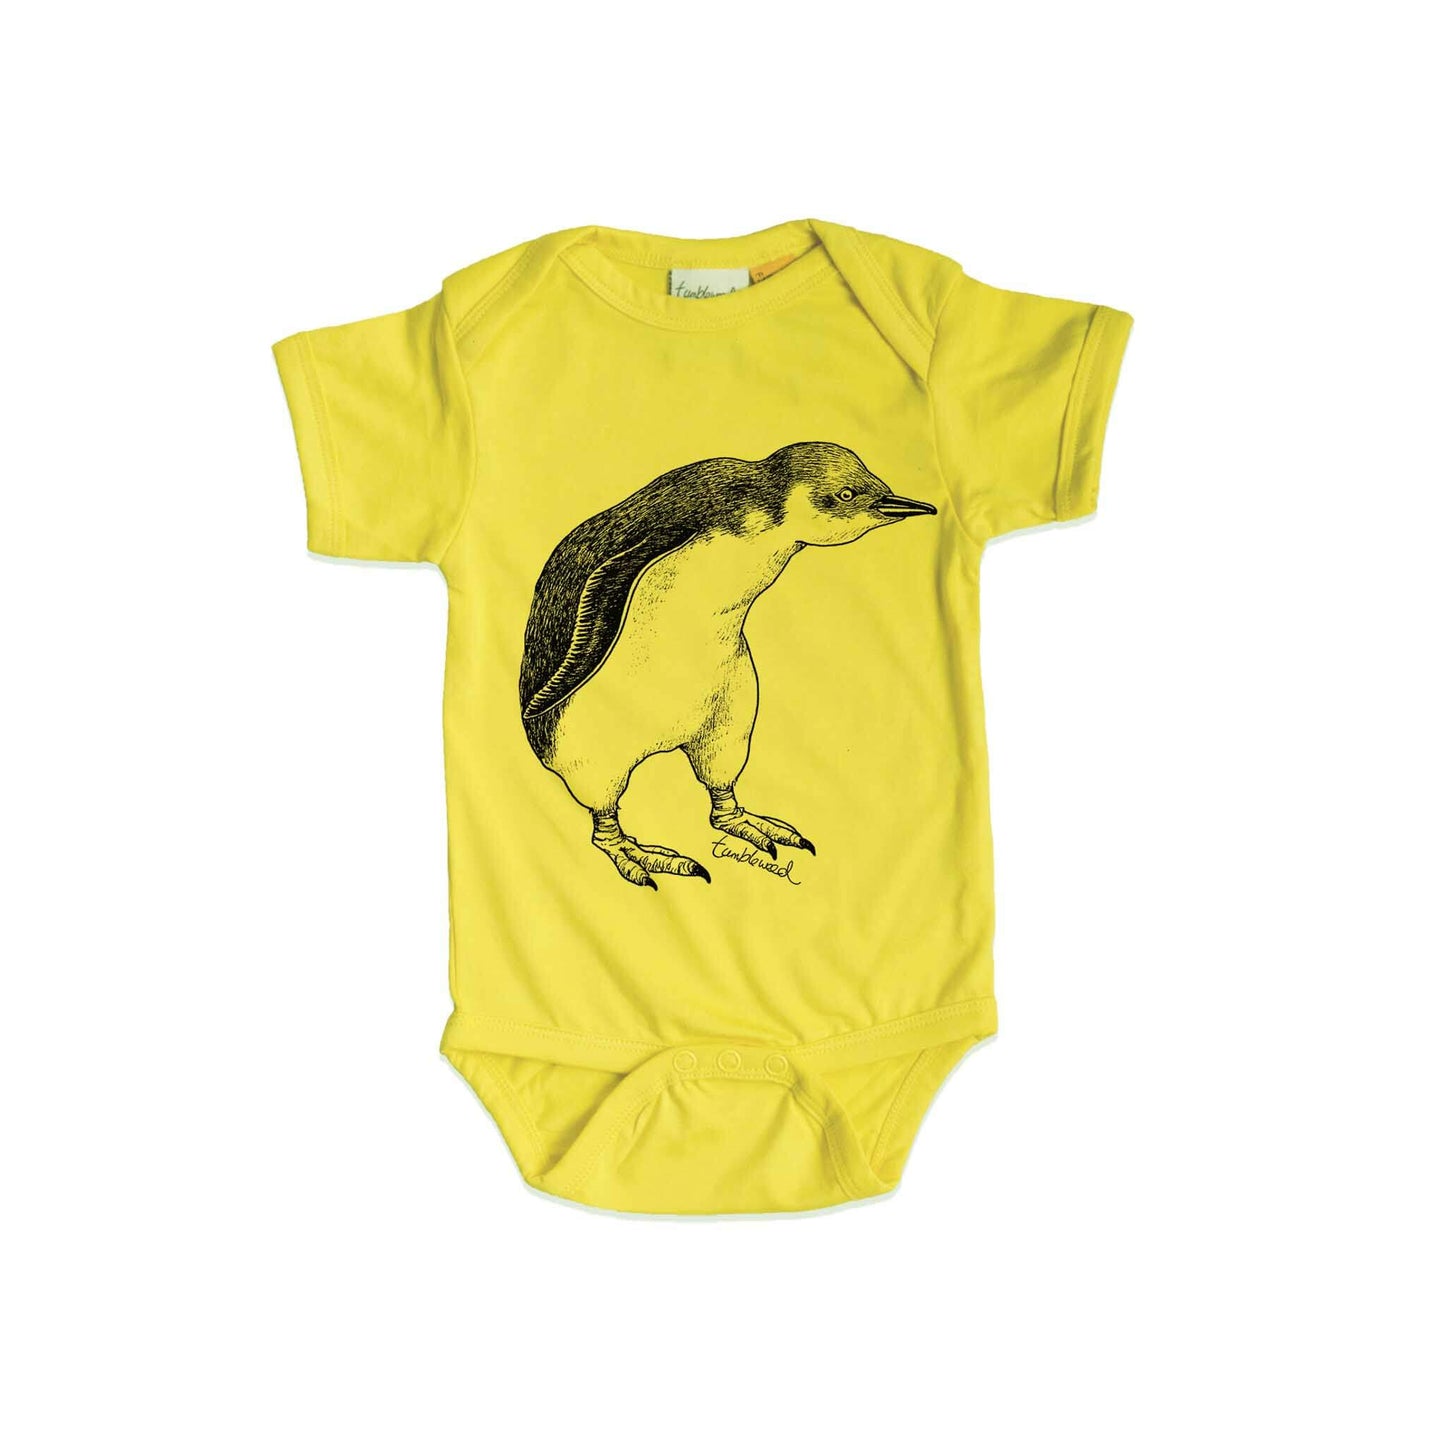 Kororā/Little Penguin Organic Cotton Baby Onesie